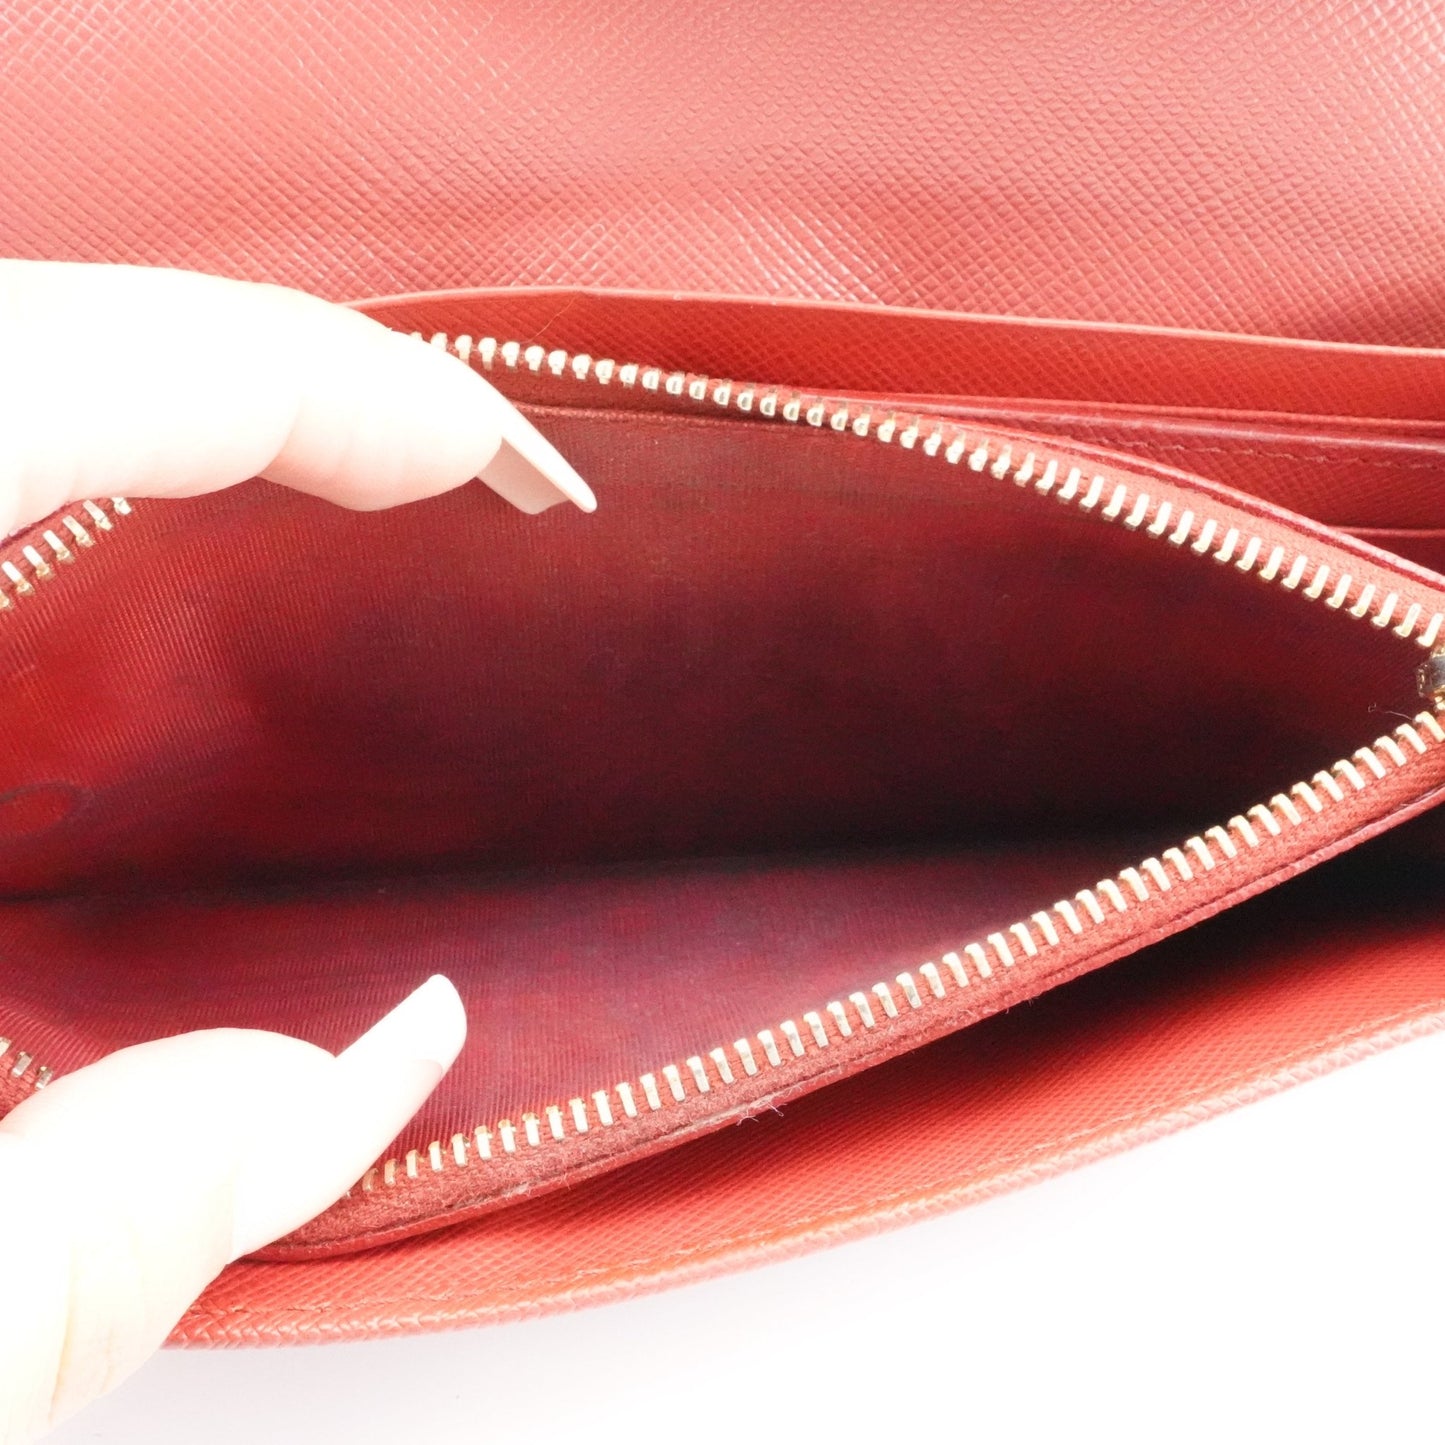 PRADA Saffiano Leather Wallet/Card Holder on Chain - Bag Envy